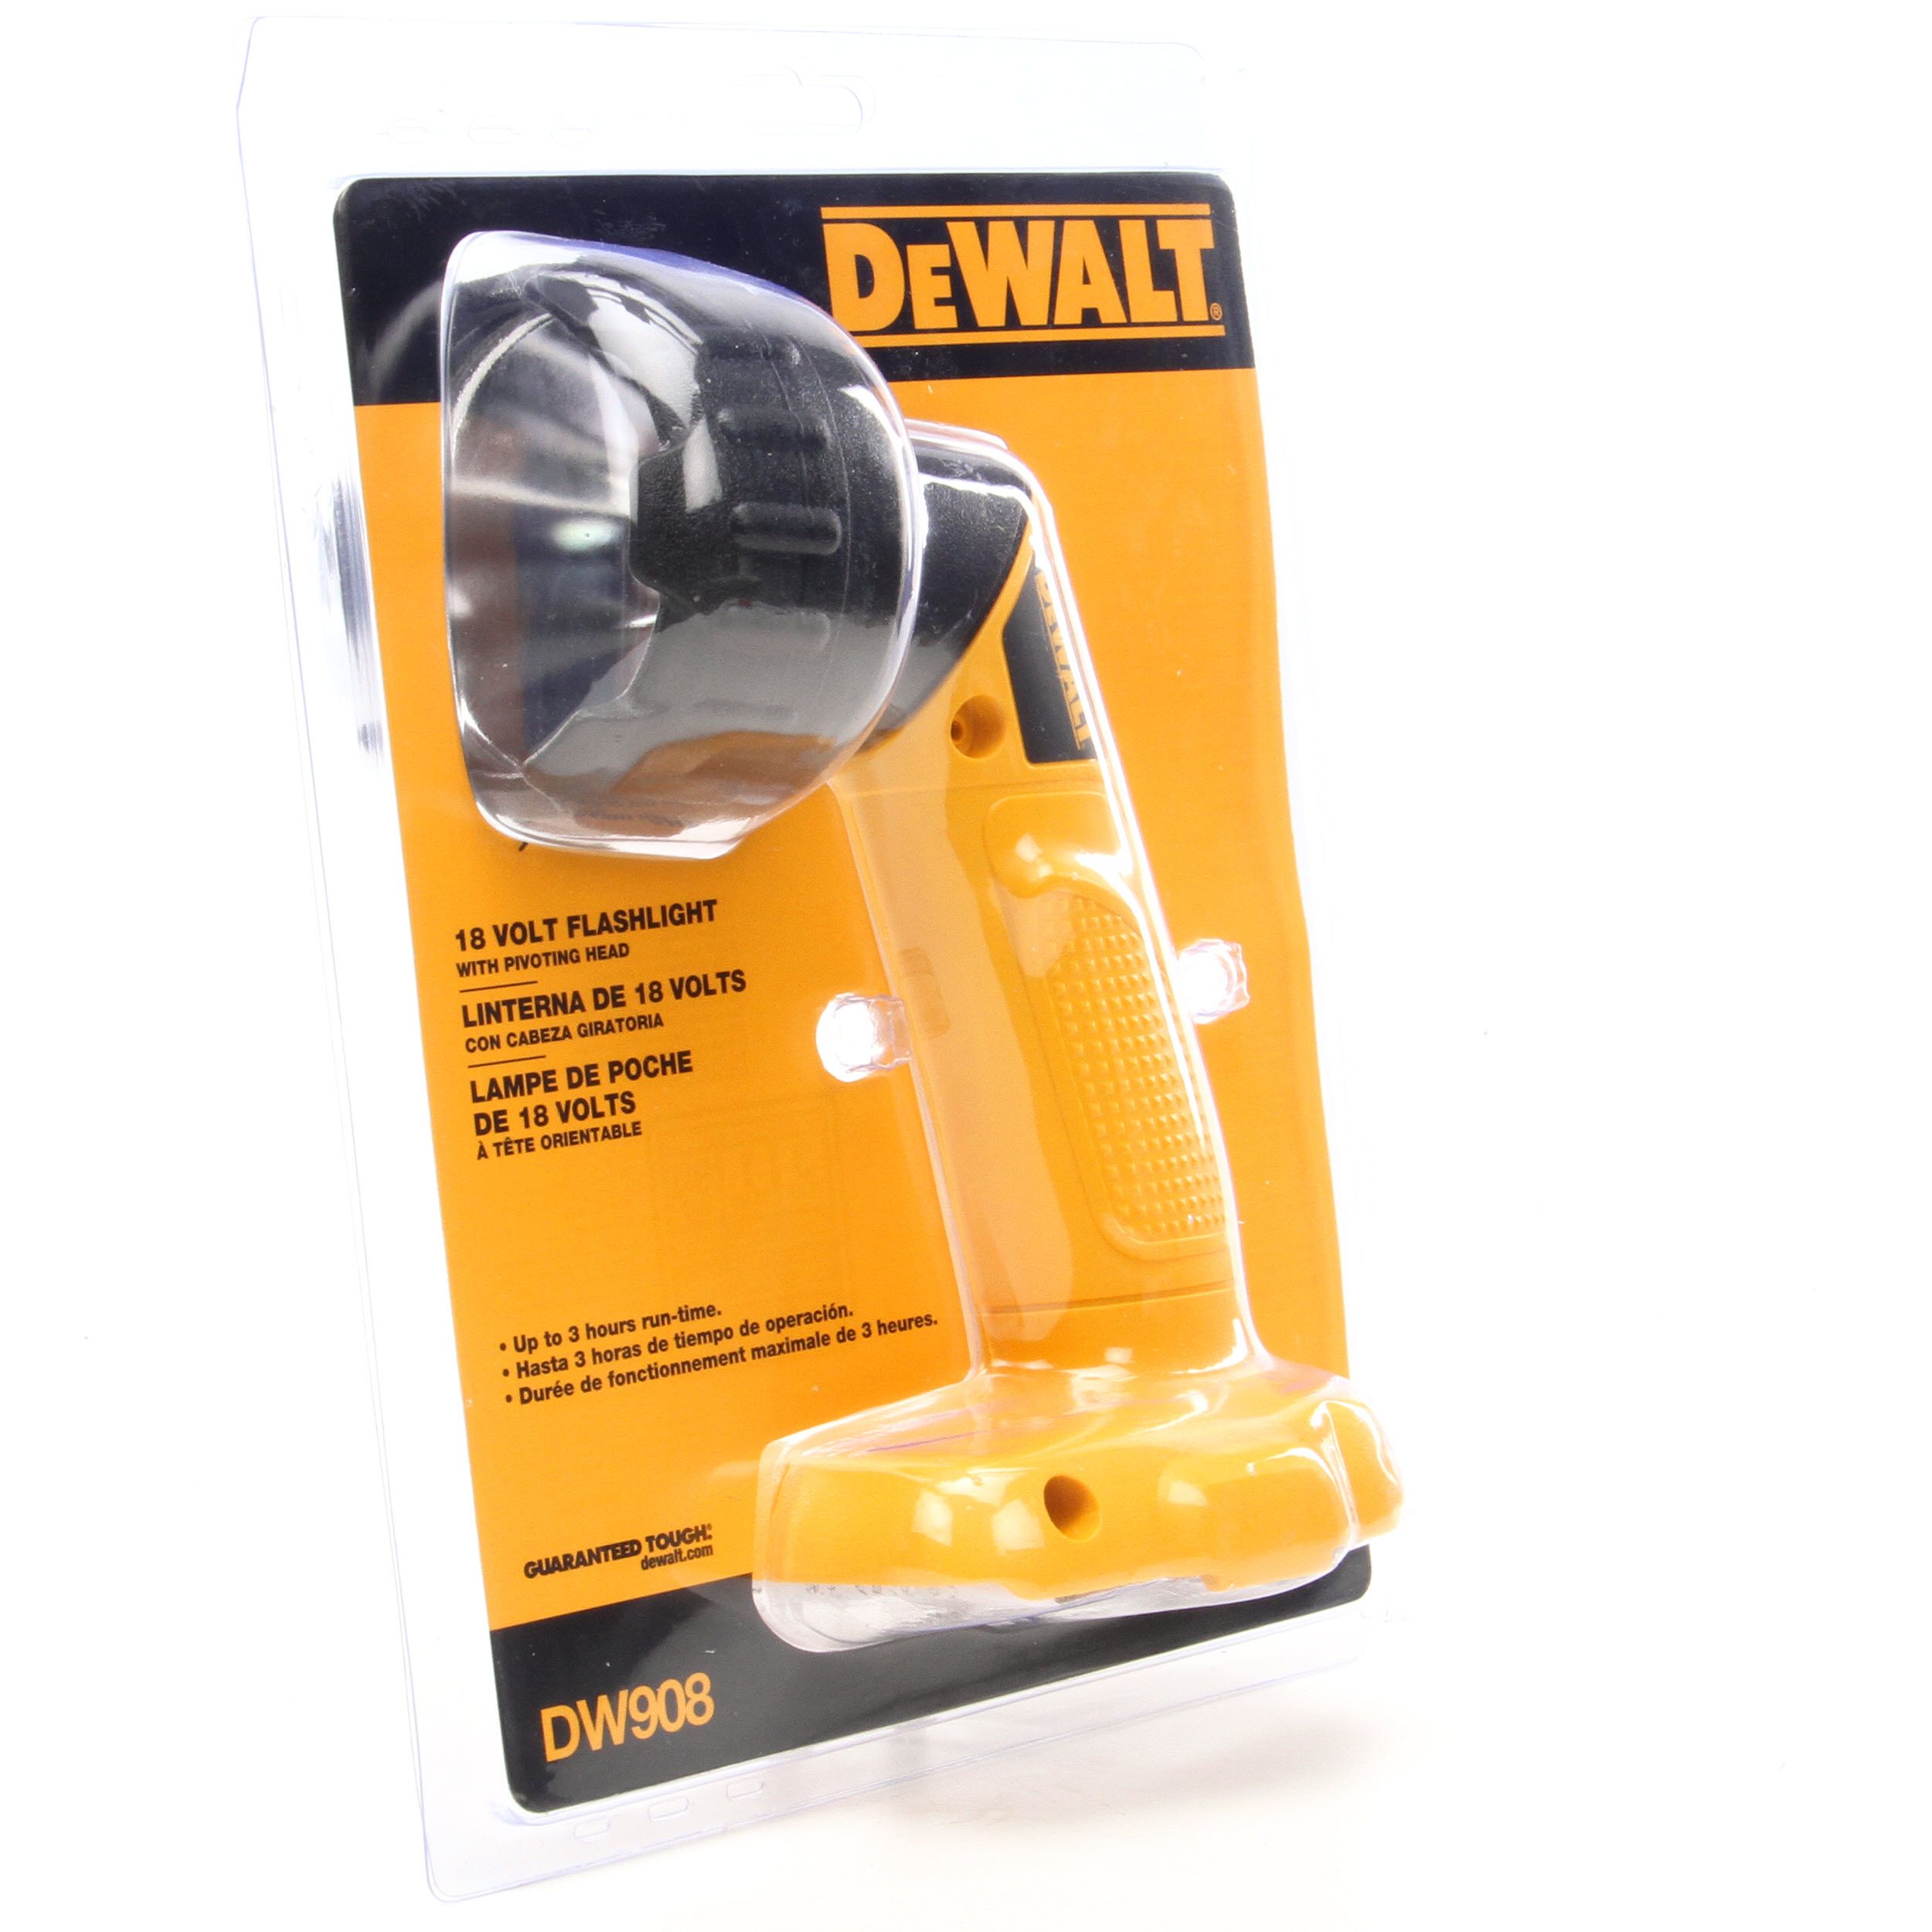 DEWALT 18V Pivoting Head Flashlight DW908 for sale online 